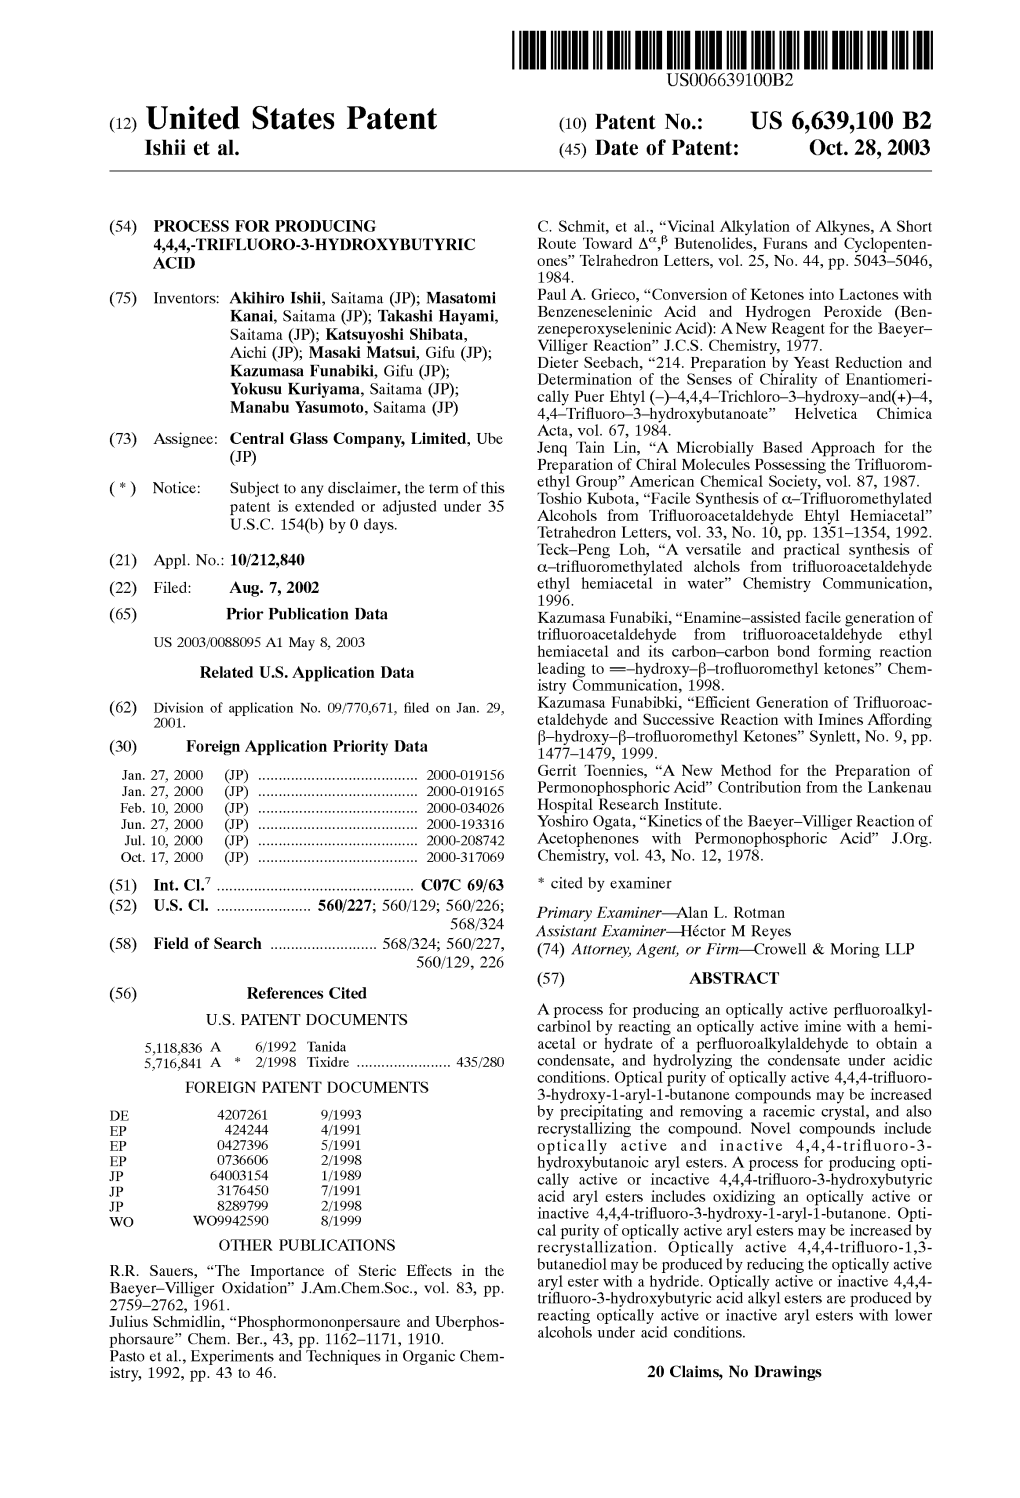 (12) United States Patent (10) Patent No.: US 6,639,100 B2 Ishii Et Al